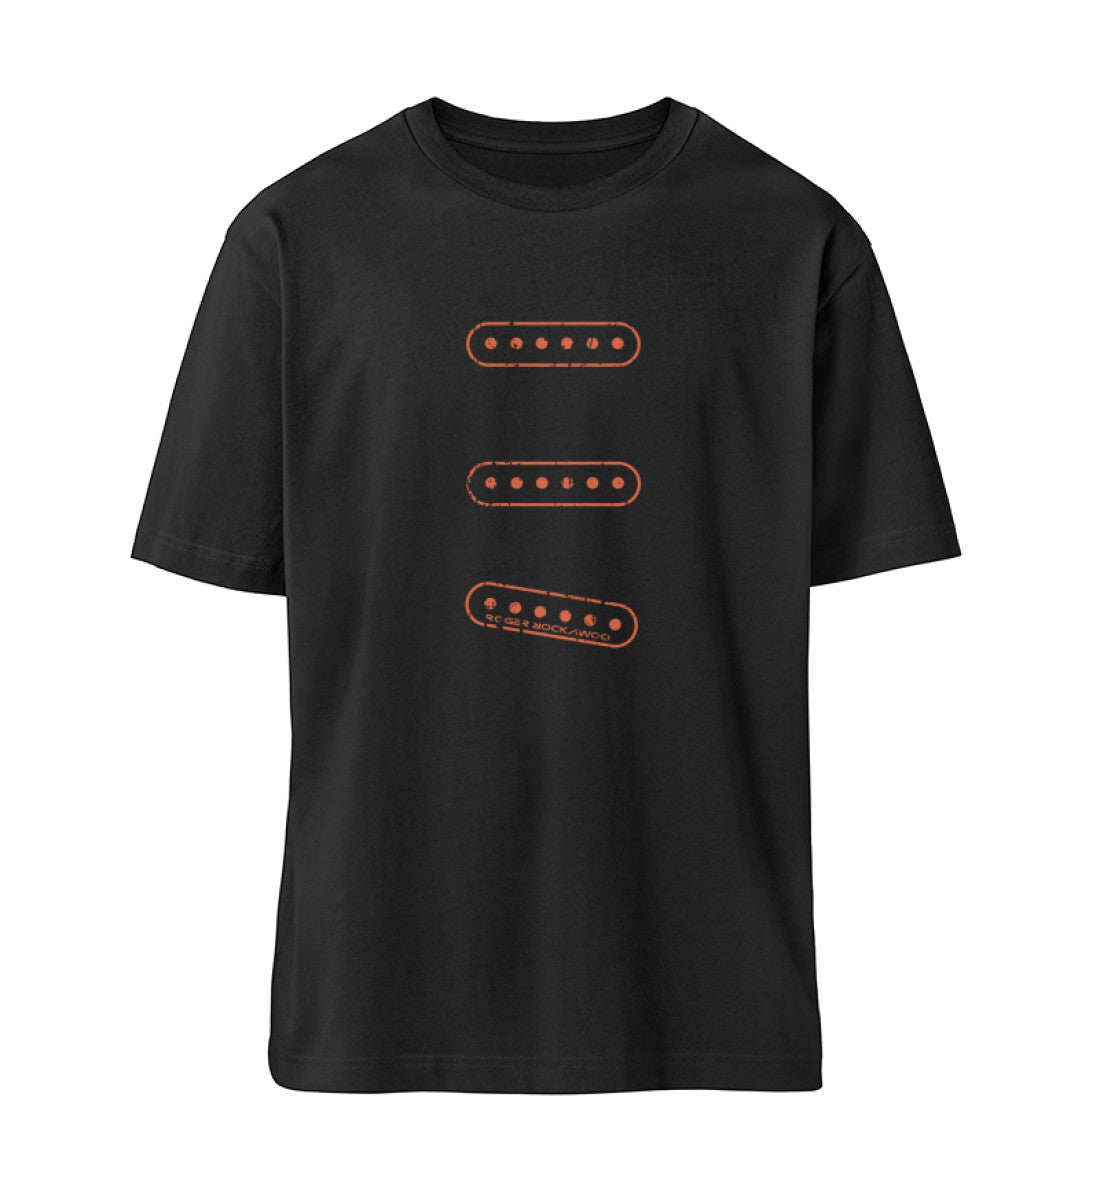 Schwarzes T-Shirt Unisex Relaxed Fit für Frauen und Männer bedruckt mit dem Design der Roger Rockawoo Kollektion E-Gitarren Single Coil Set Up